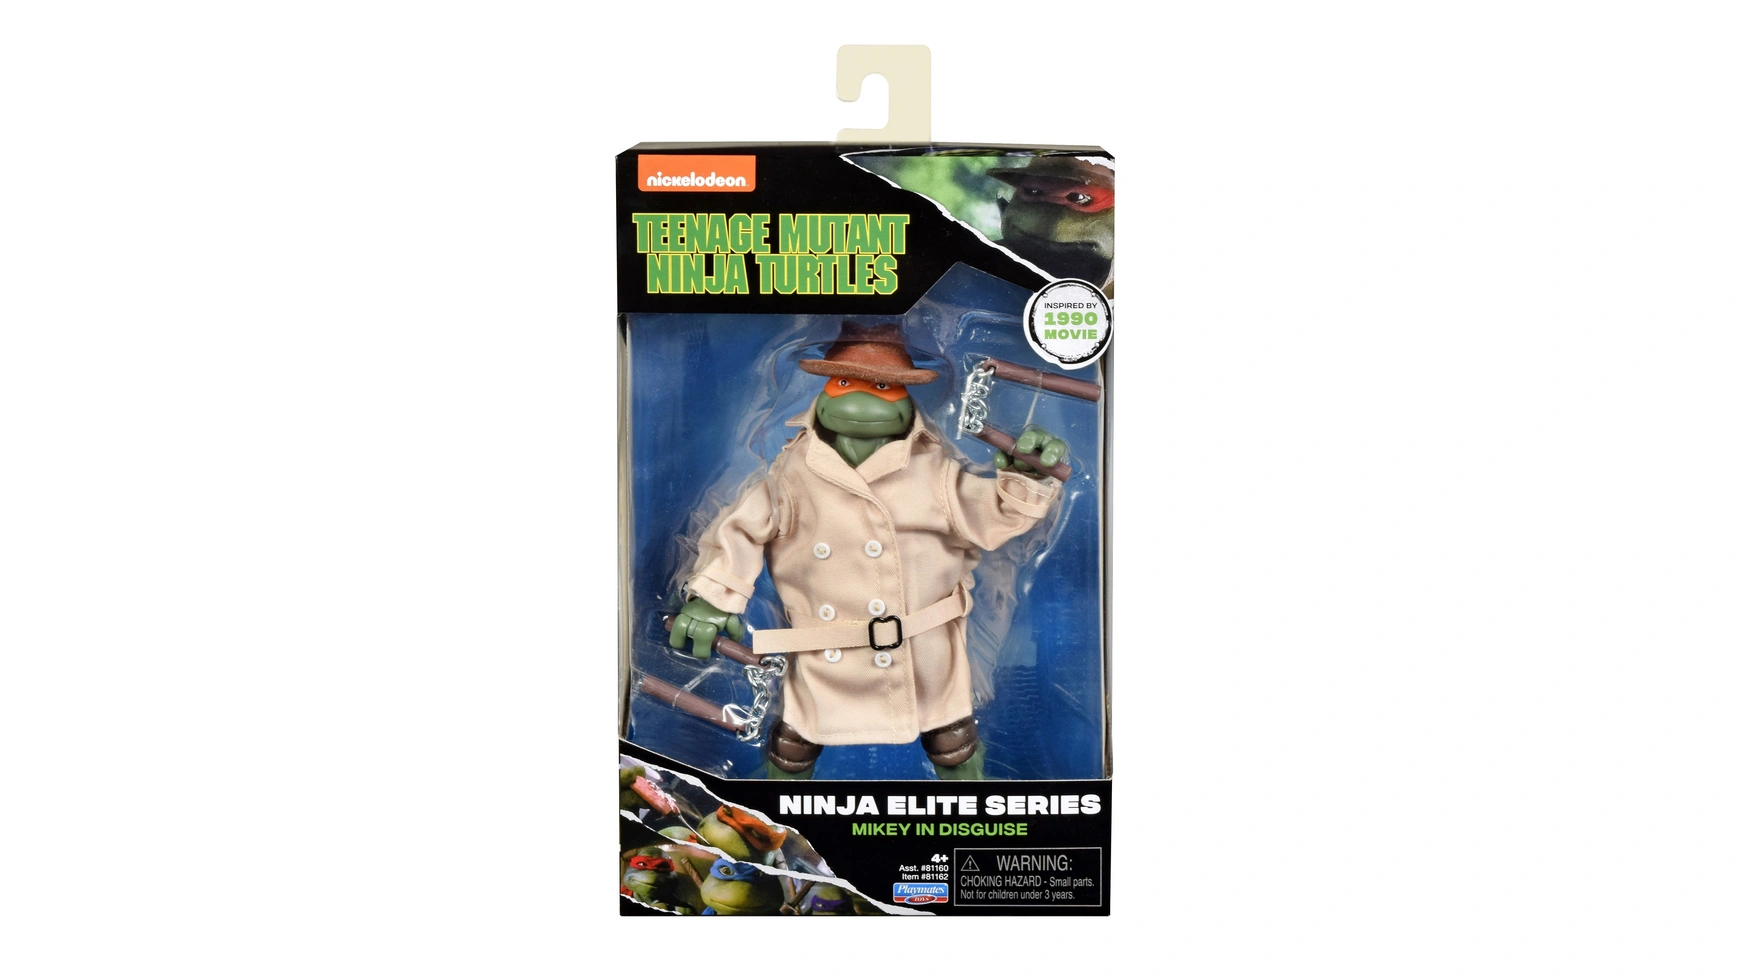 Turtles-ниндзя Ninja Elite Mike цена и фото